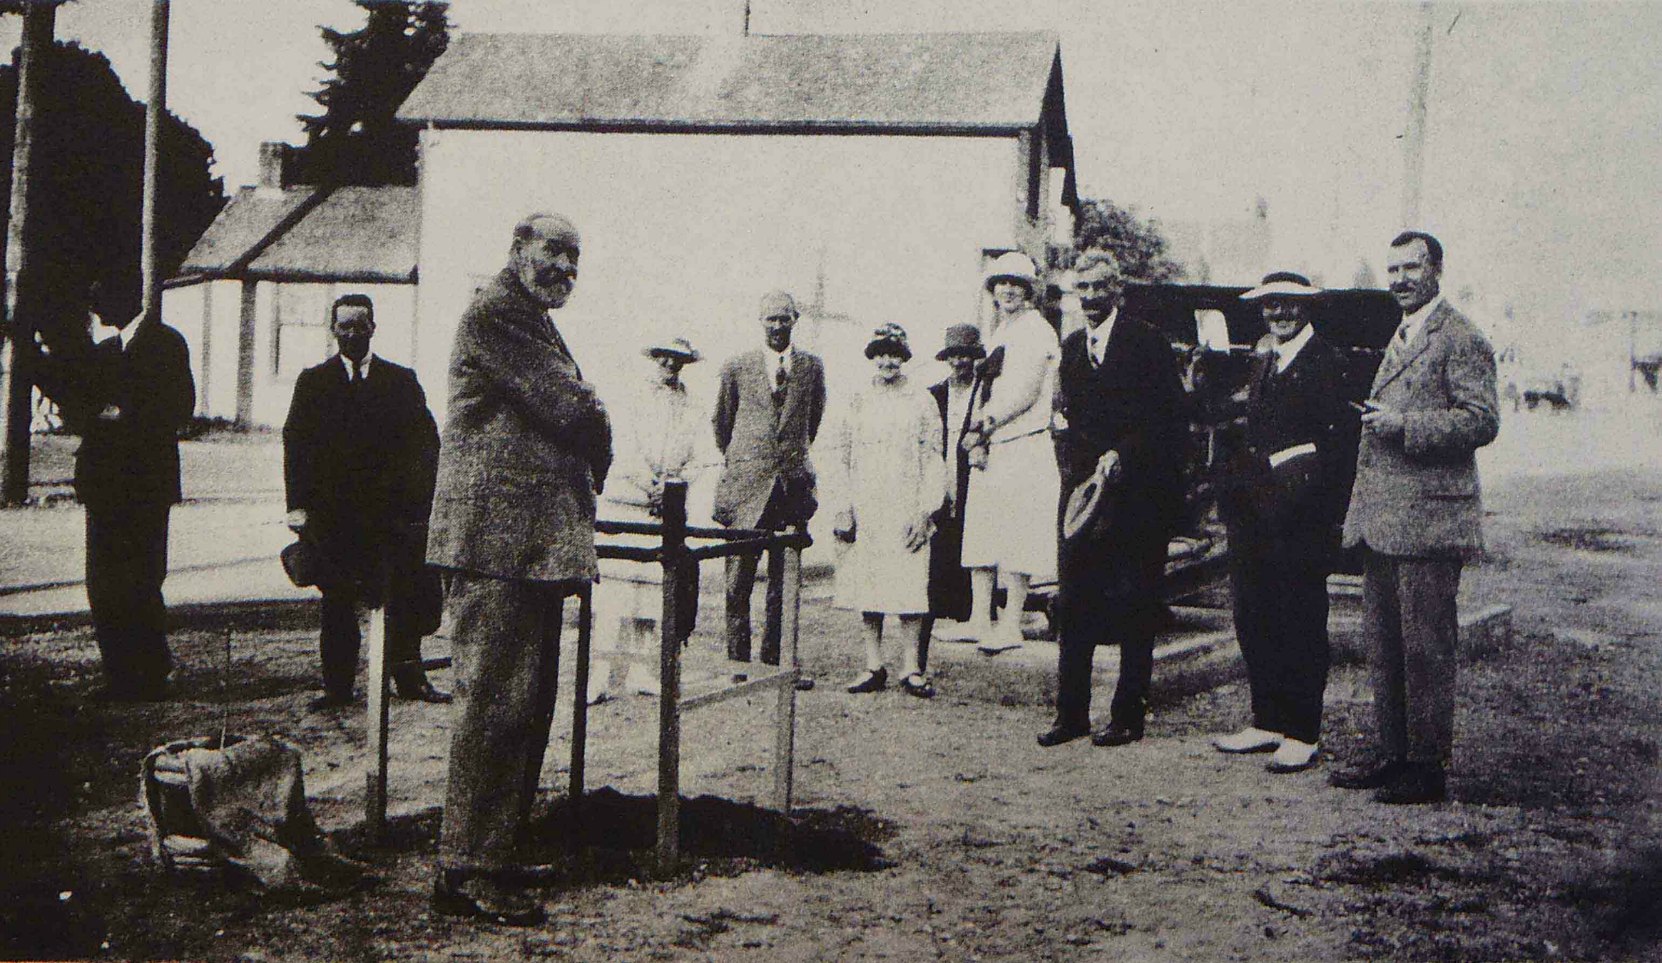 David Alexander planting the Confederation Tree, 1 July 1927